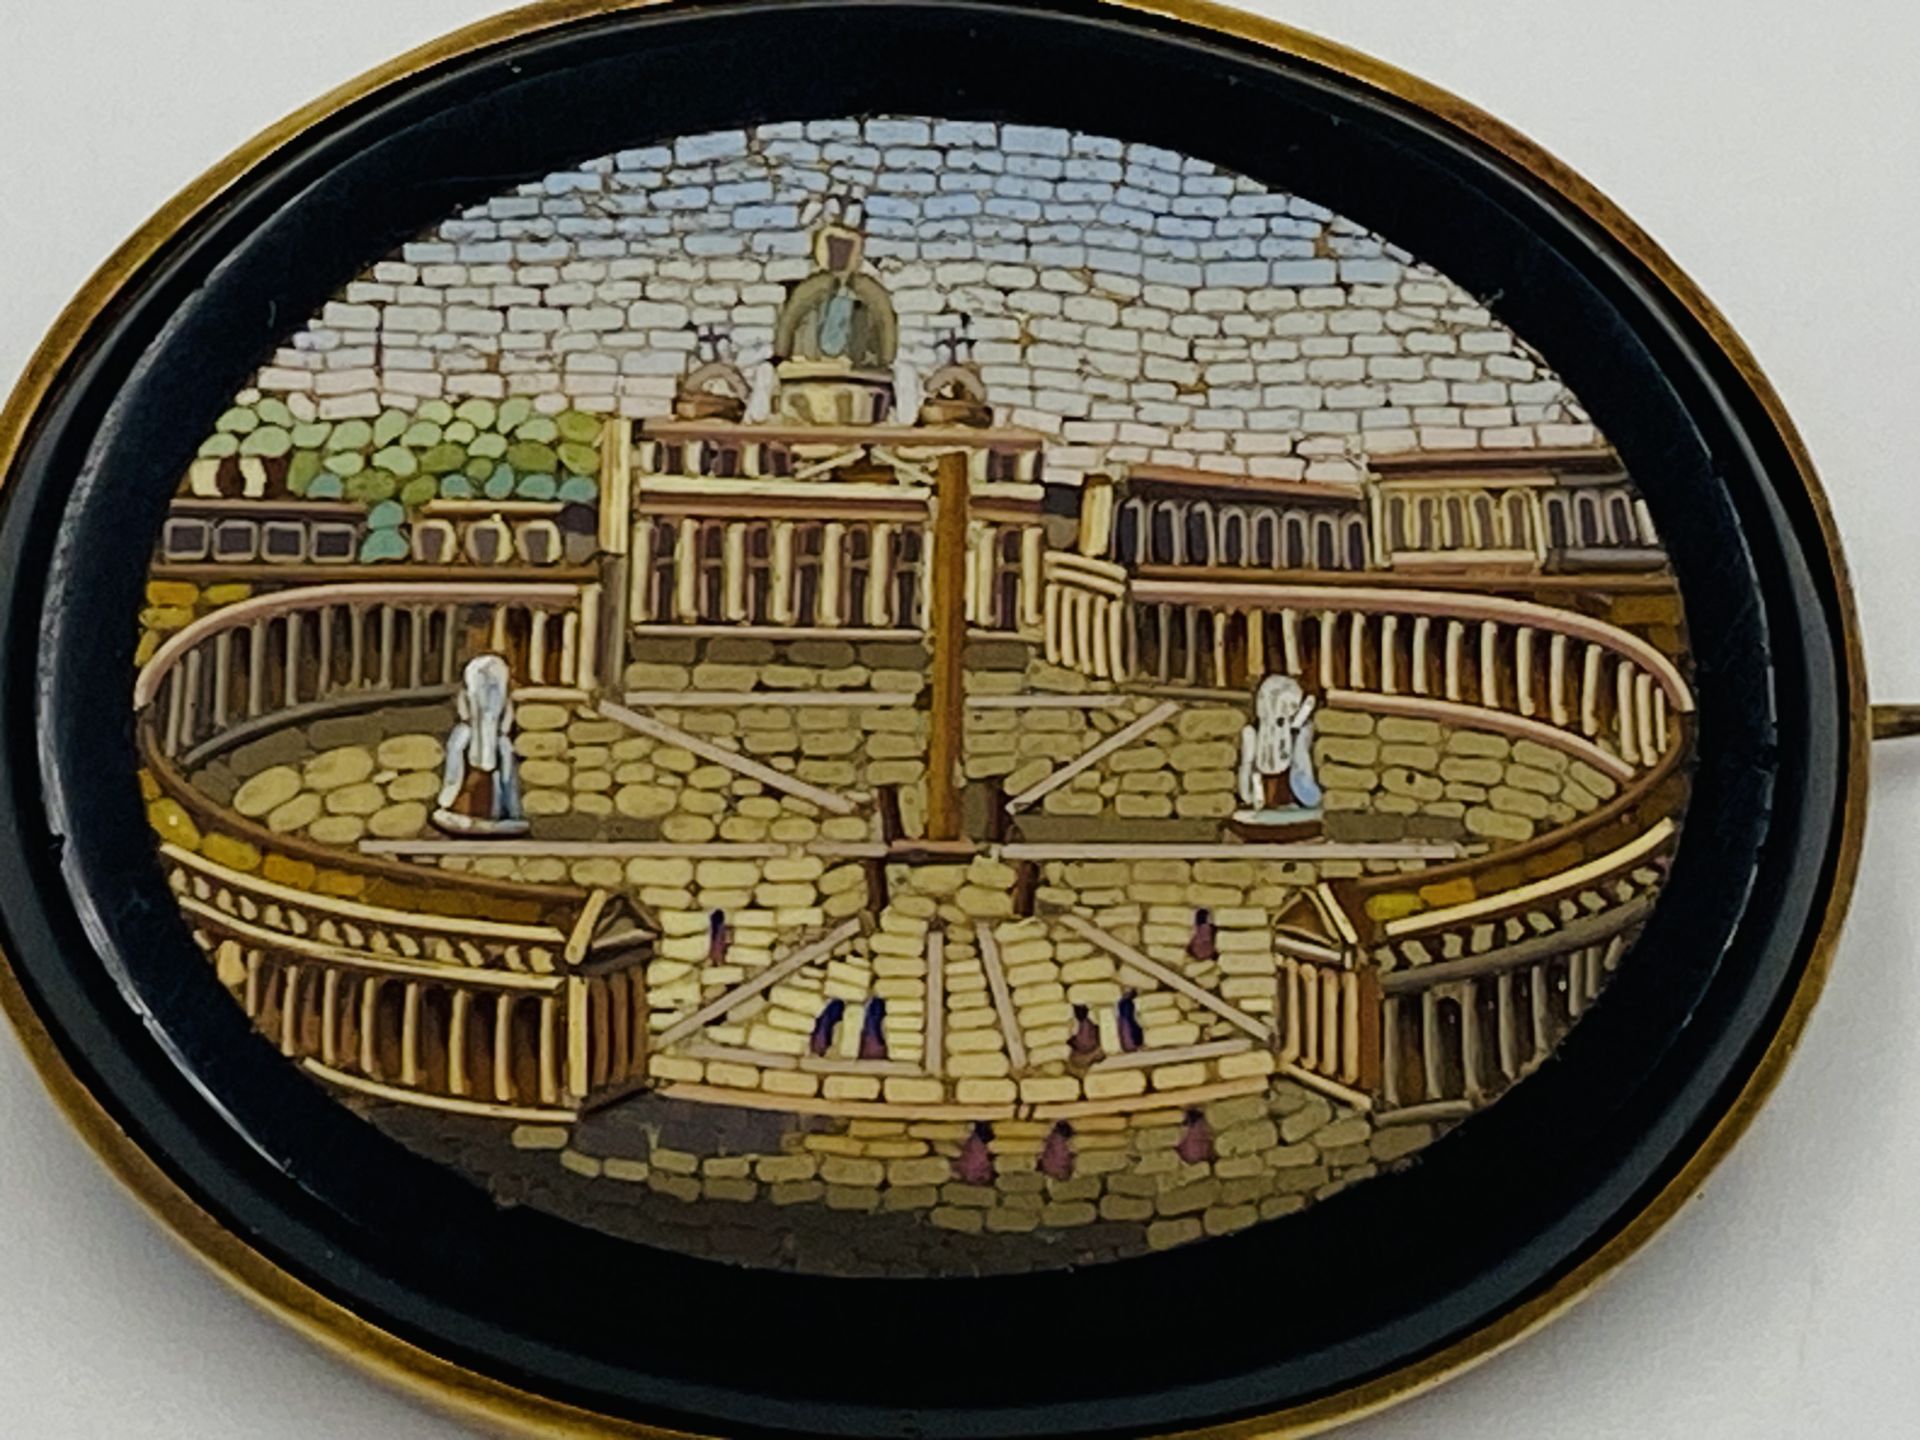 Micro mosaic gold brooch - Image 2 of 4